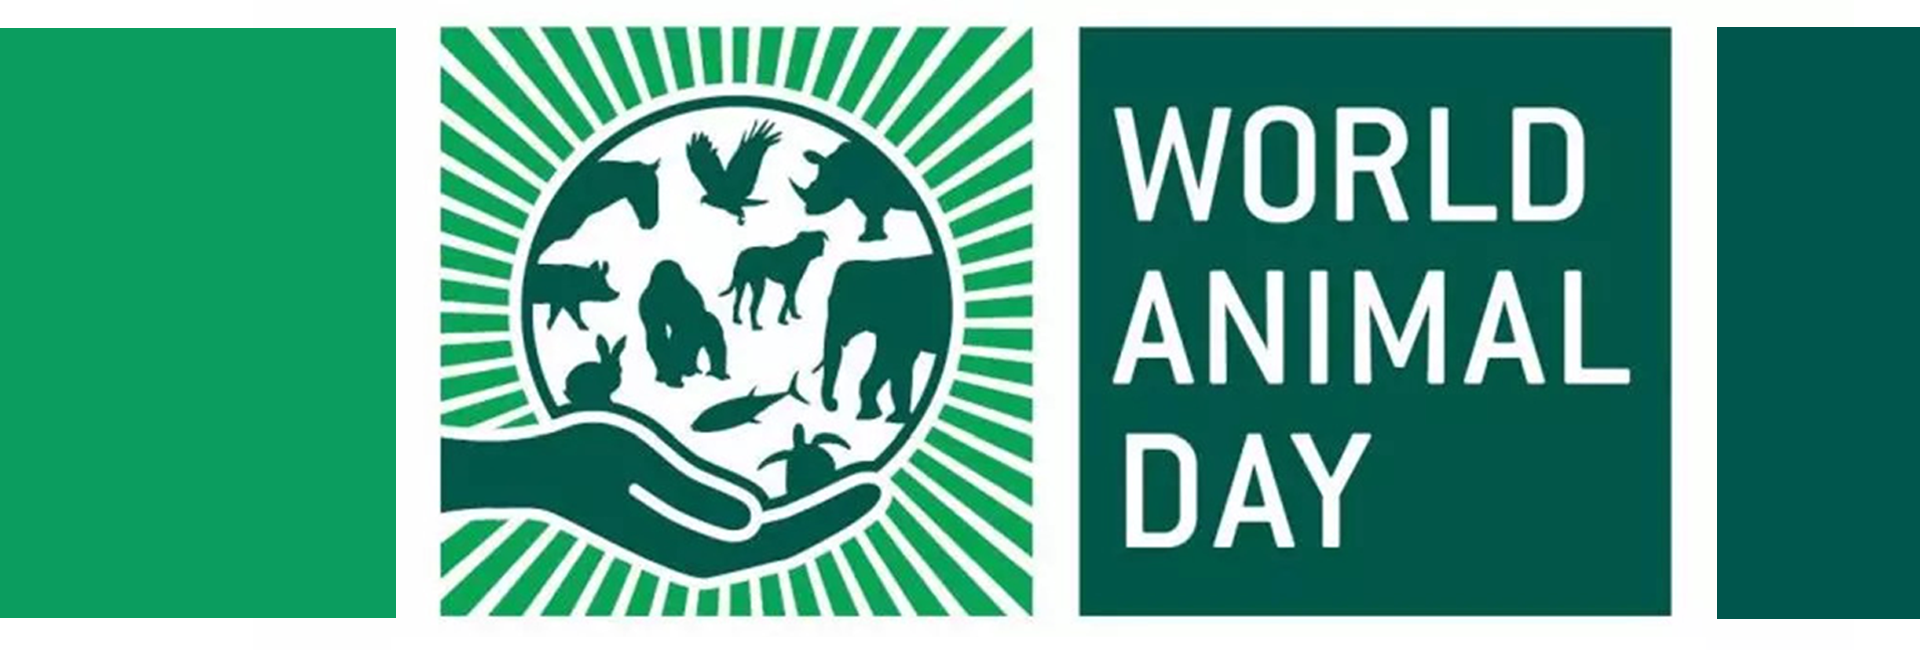 World Animal Day 2020